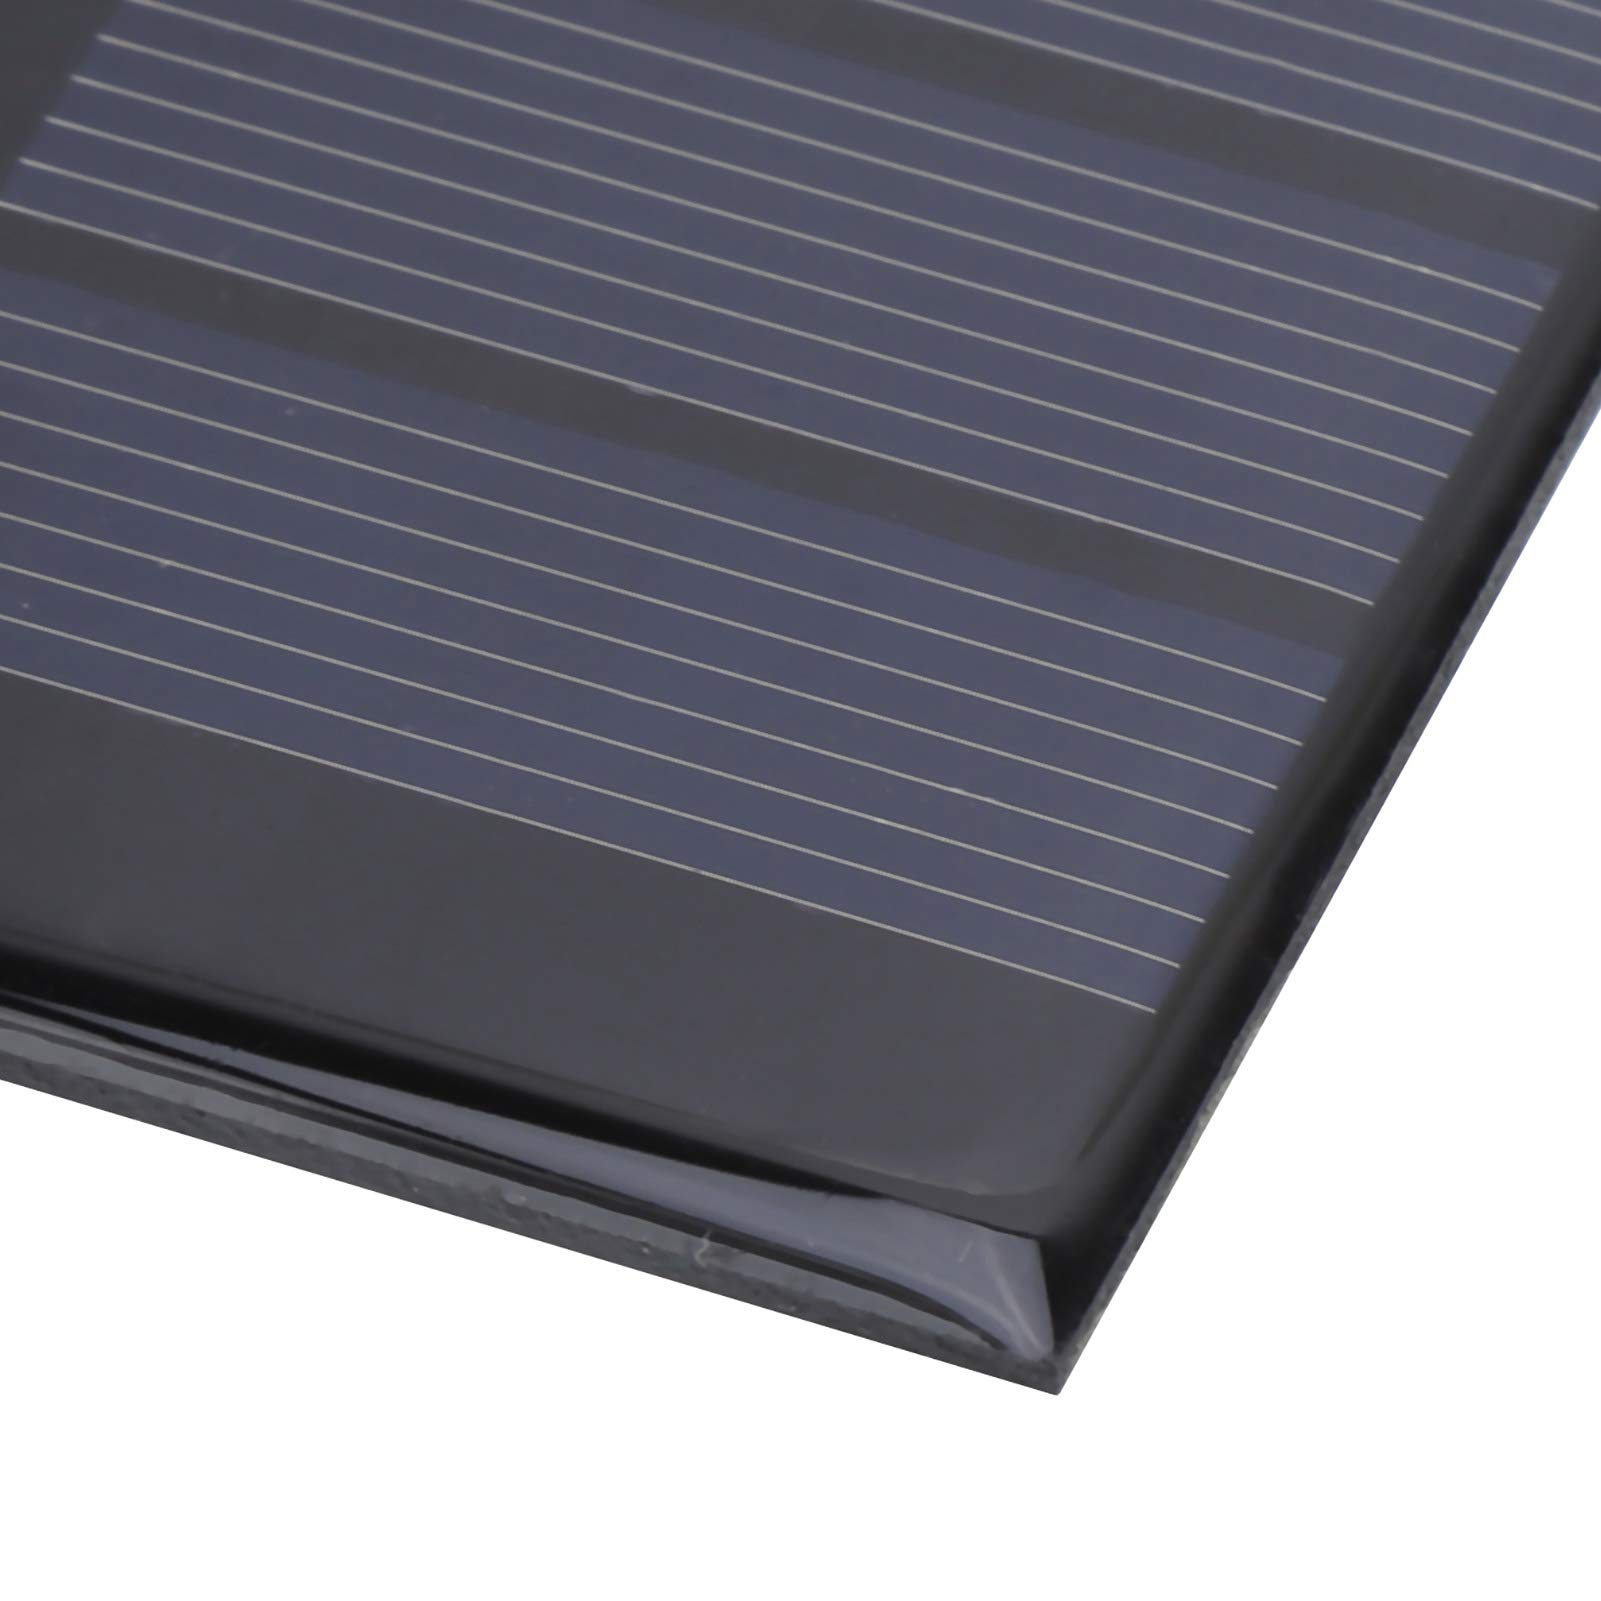 Mini Solar Panels for Solar Power 5Pcs DC 0.65W 1.5V Solar Panel Module Polysilicon Small Battery Cell Board Module with 30cm Wire 60 x 80 x 3MM,Solar Controller